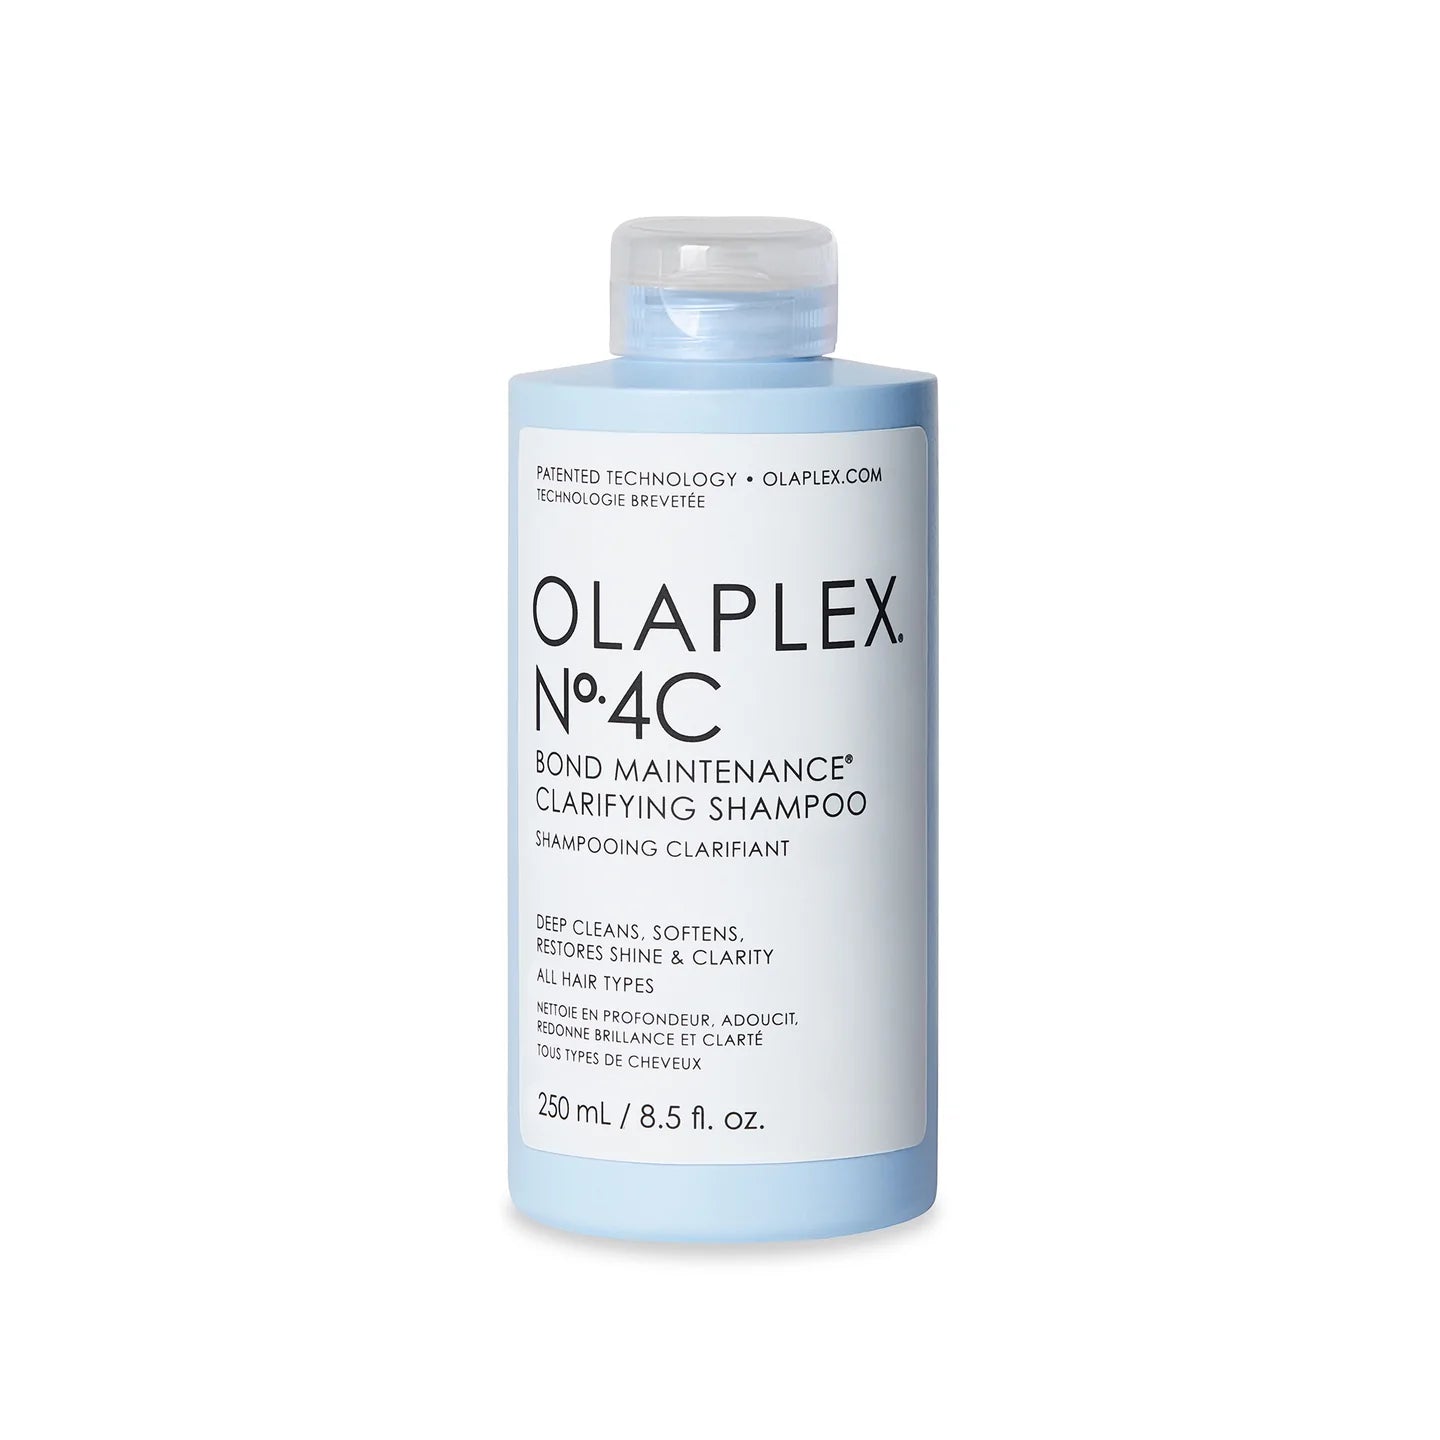 Olaplex shampooing clarifiant 4-C